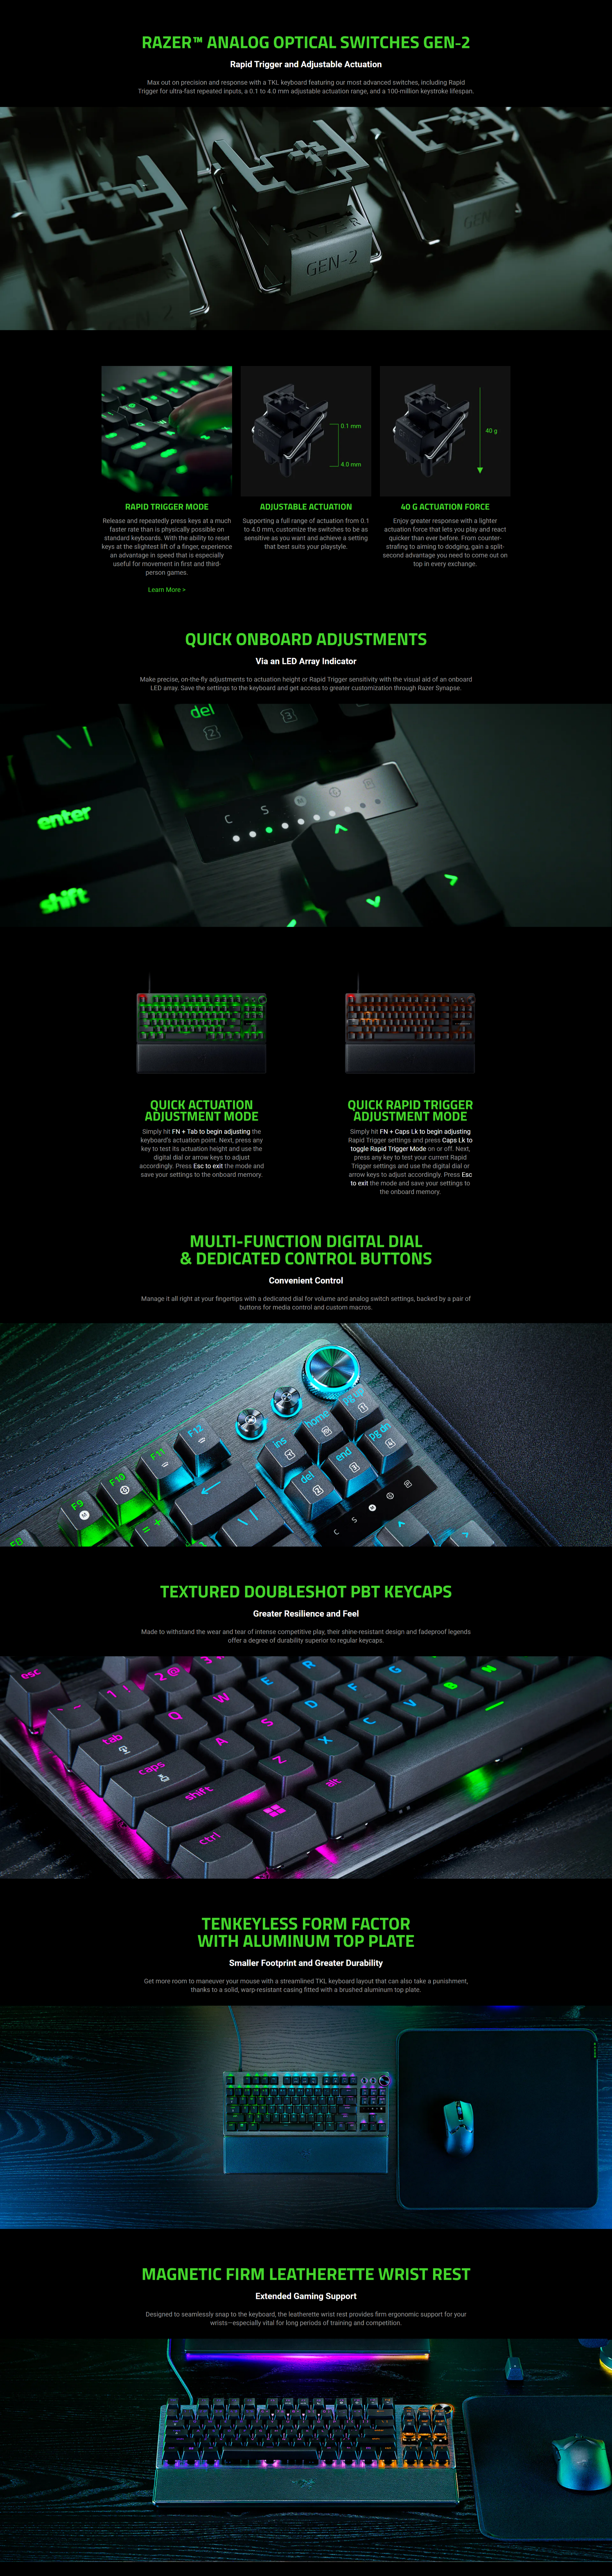 A large marketing image providing additional information about the product Razer Huntsman V3 Pro Tenkeyless - TKL Analog Optical eSports Keyboard - Additional alt info not provided